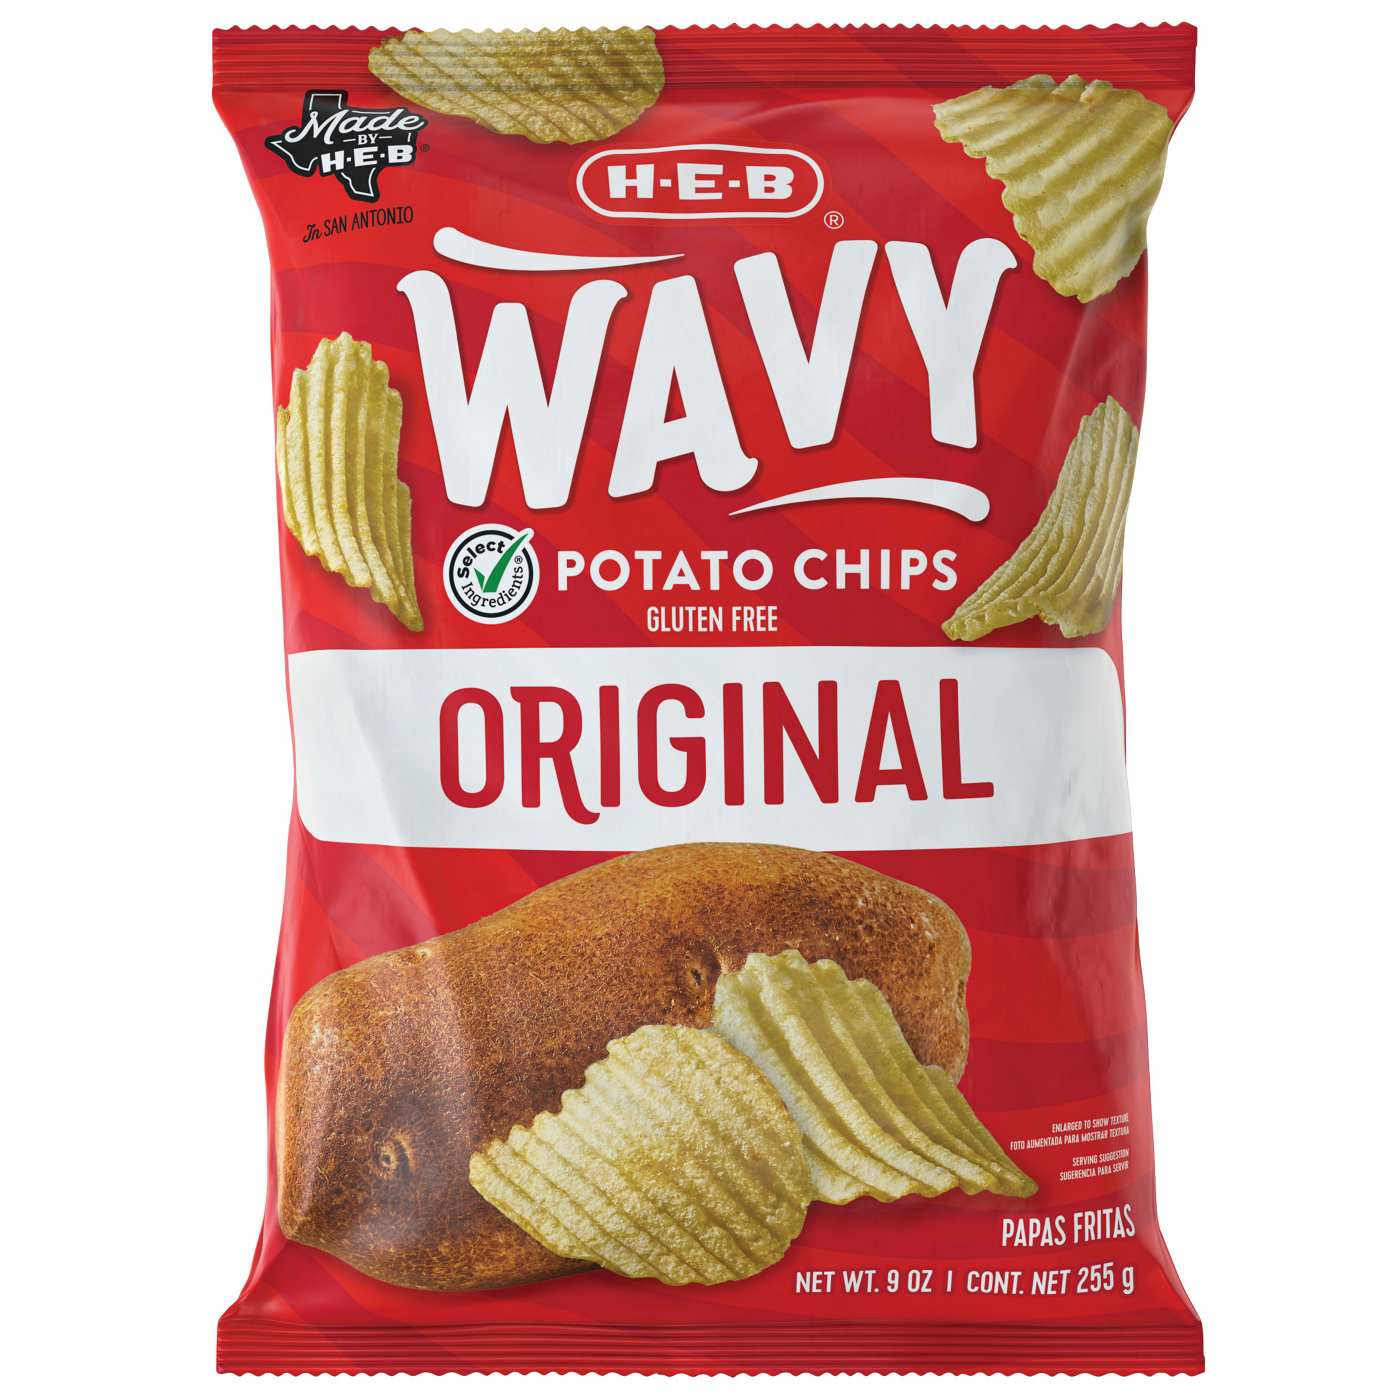 zand Ontspannend minstens H-E-B Select Ingredients Wavy Original Potato Chips - Shop Chips at H-E-B